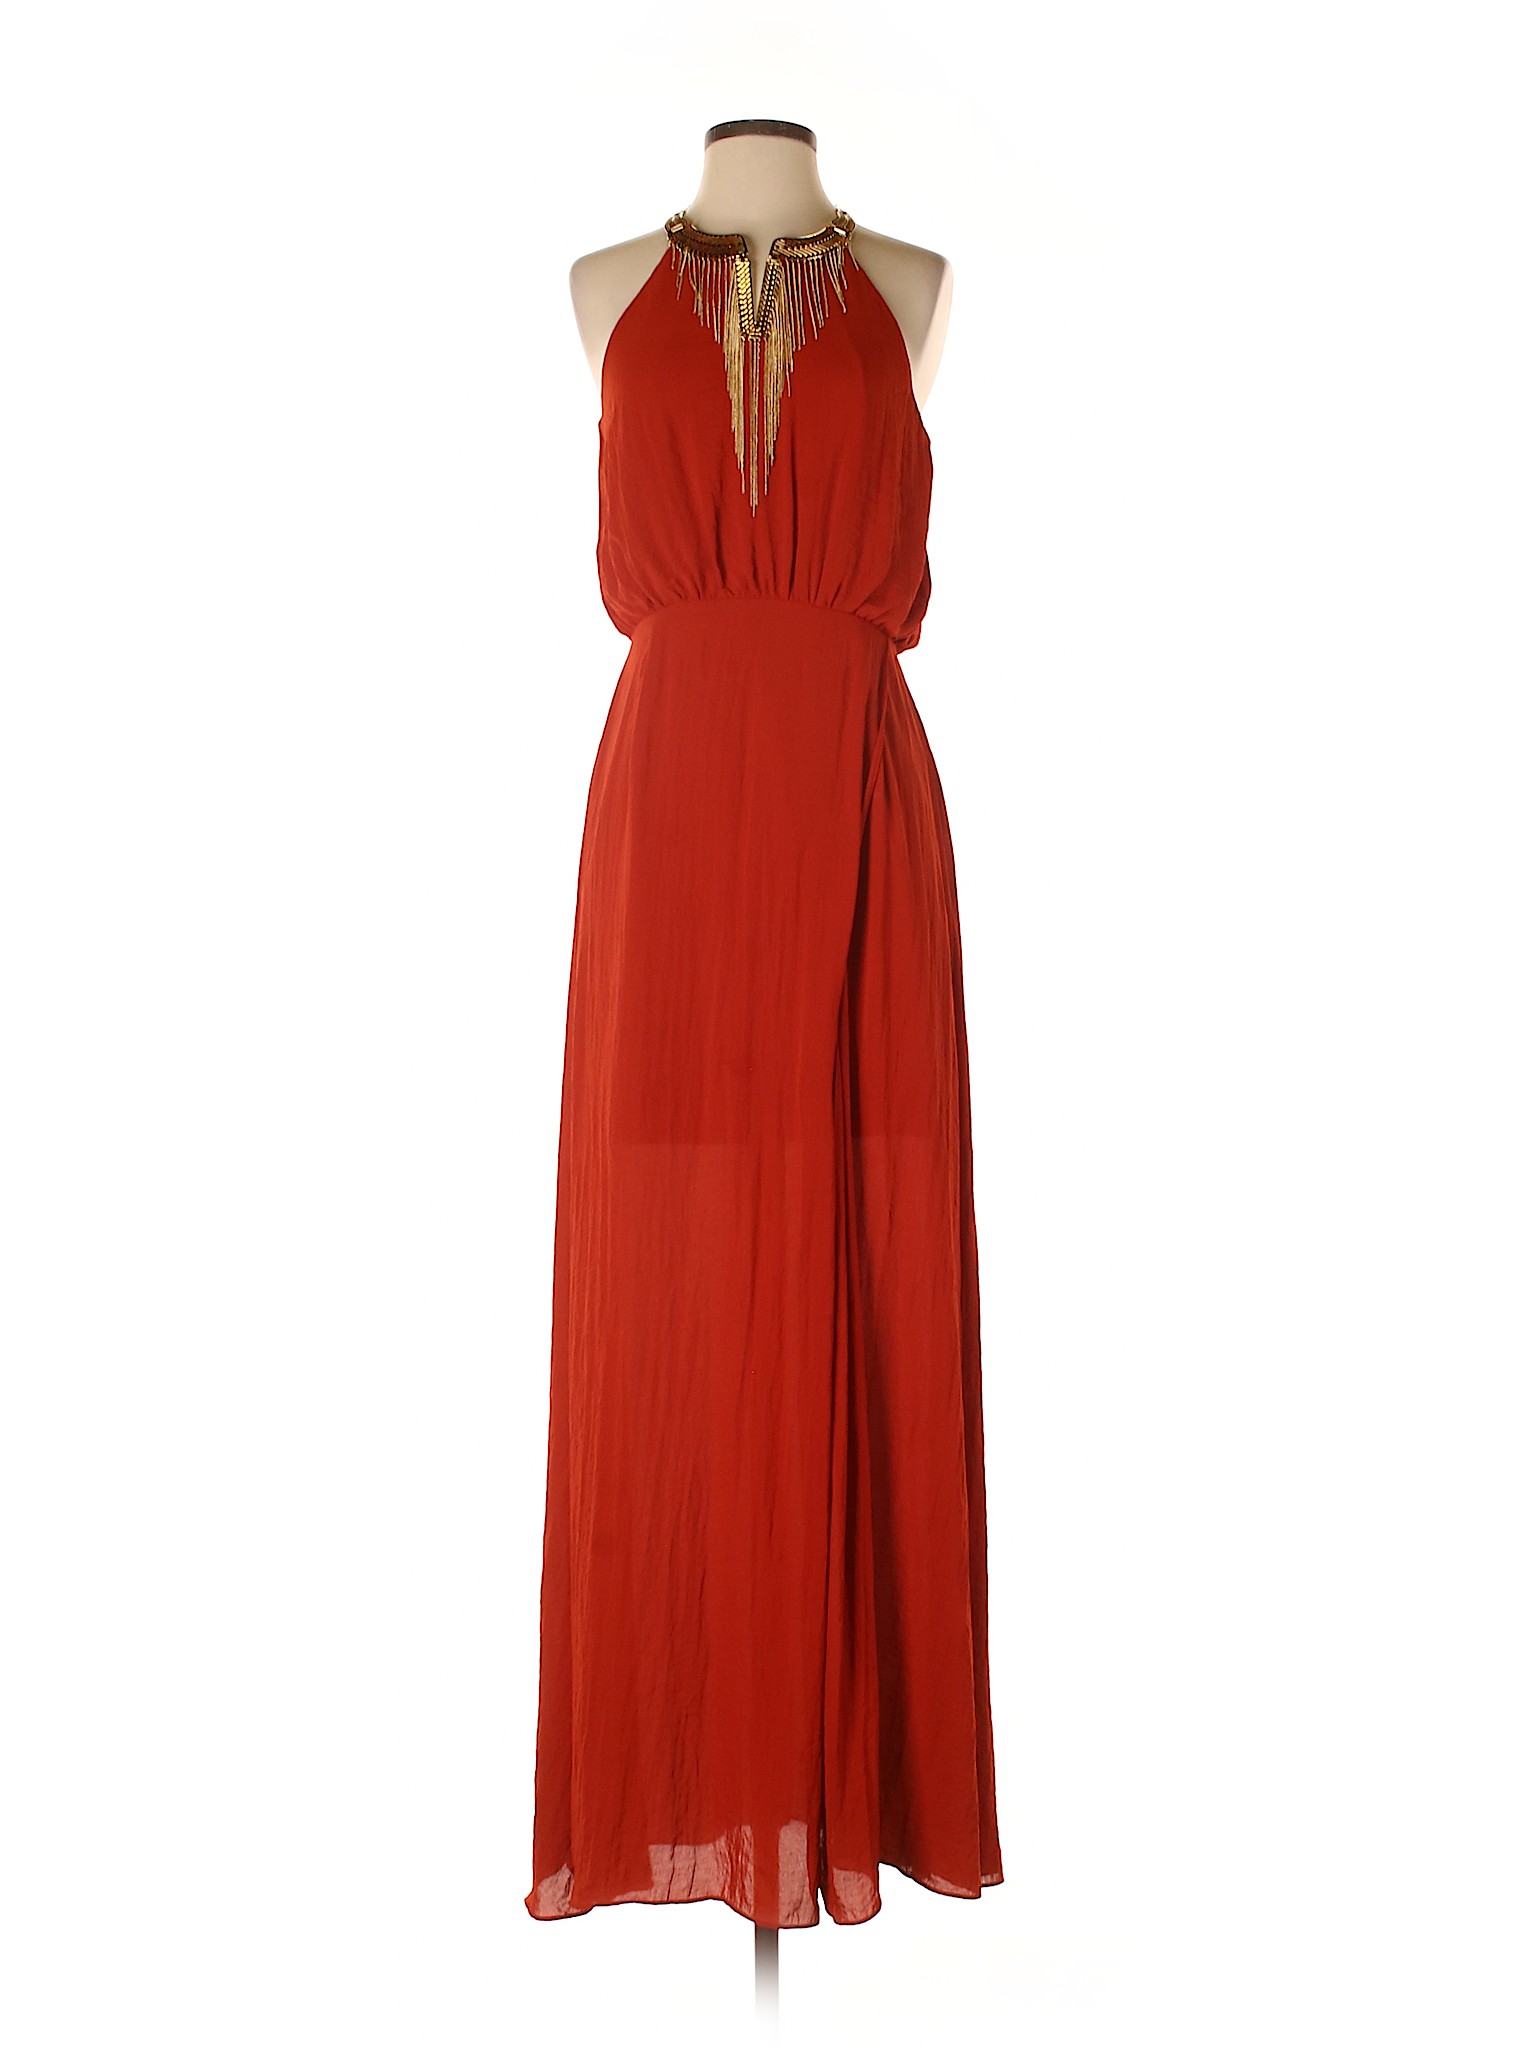 H&M Women Red Casual Dress 8 | eBay